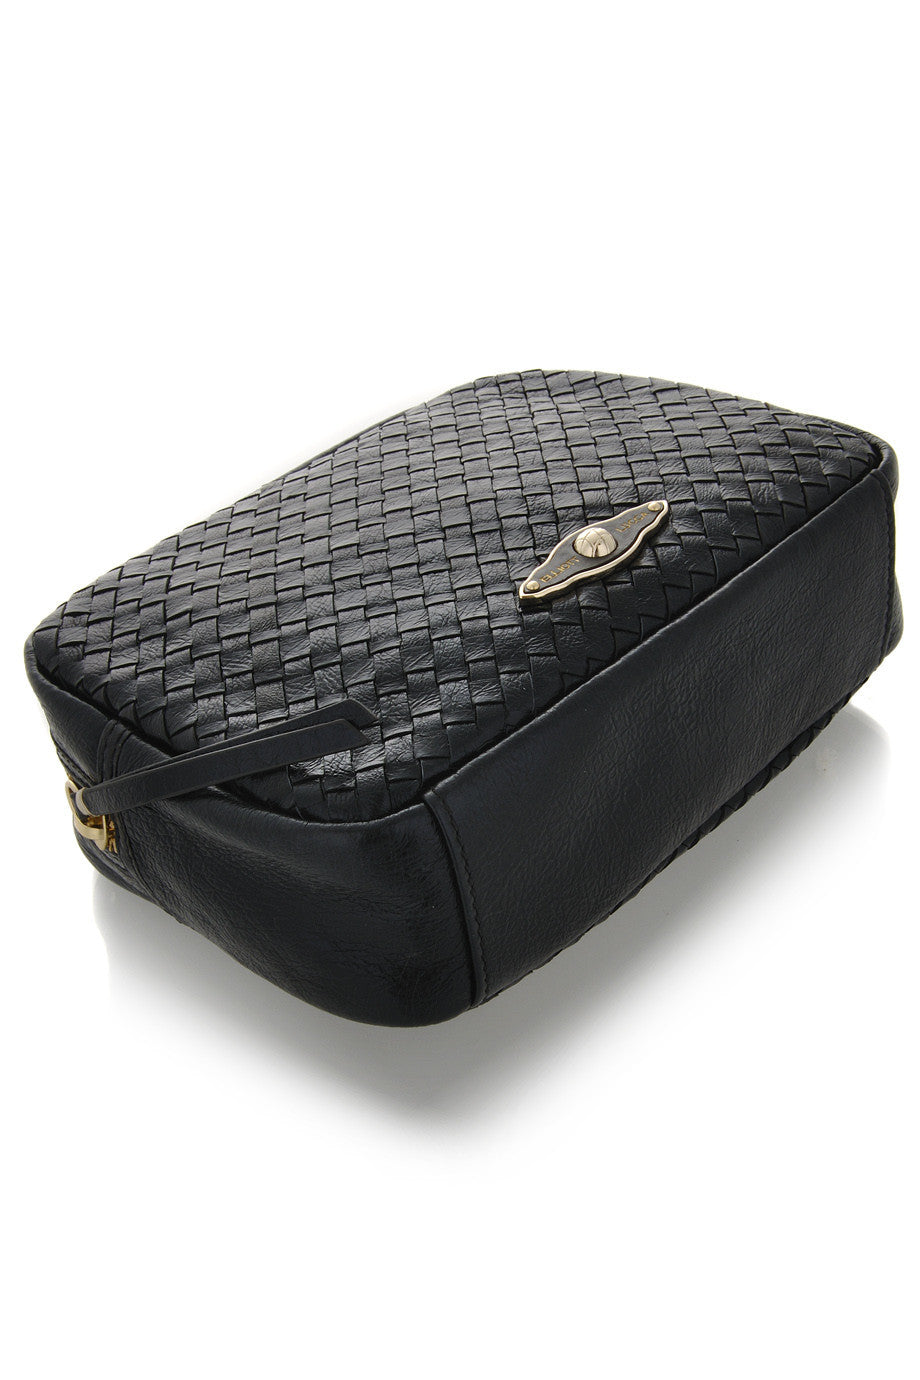 ELLIOTT LUCCA Leather Woman Clutch Bags - MILLANA Black Onyx Leather Clutch Bag